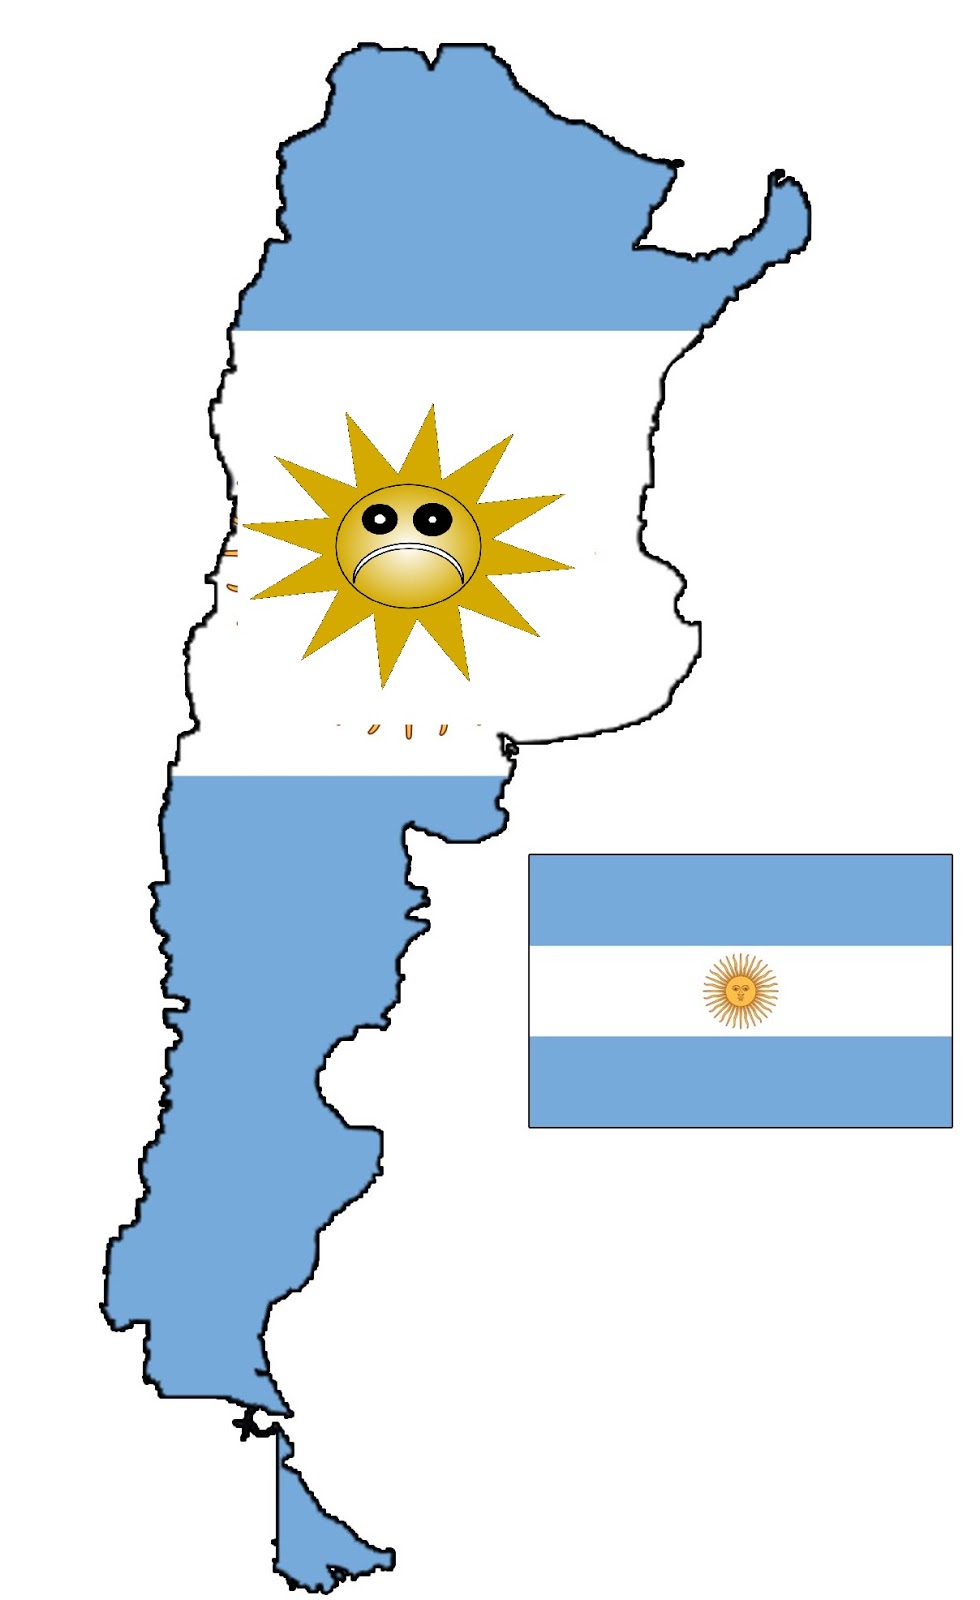 Argentina abajo